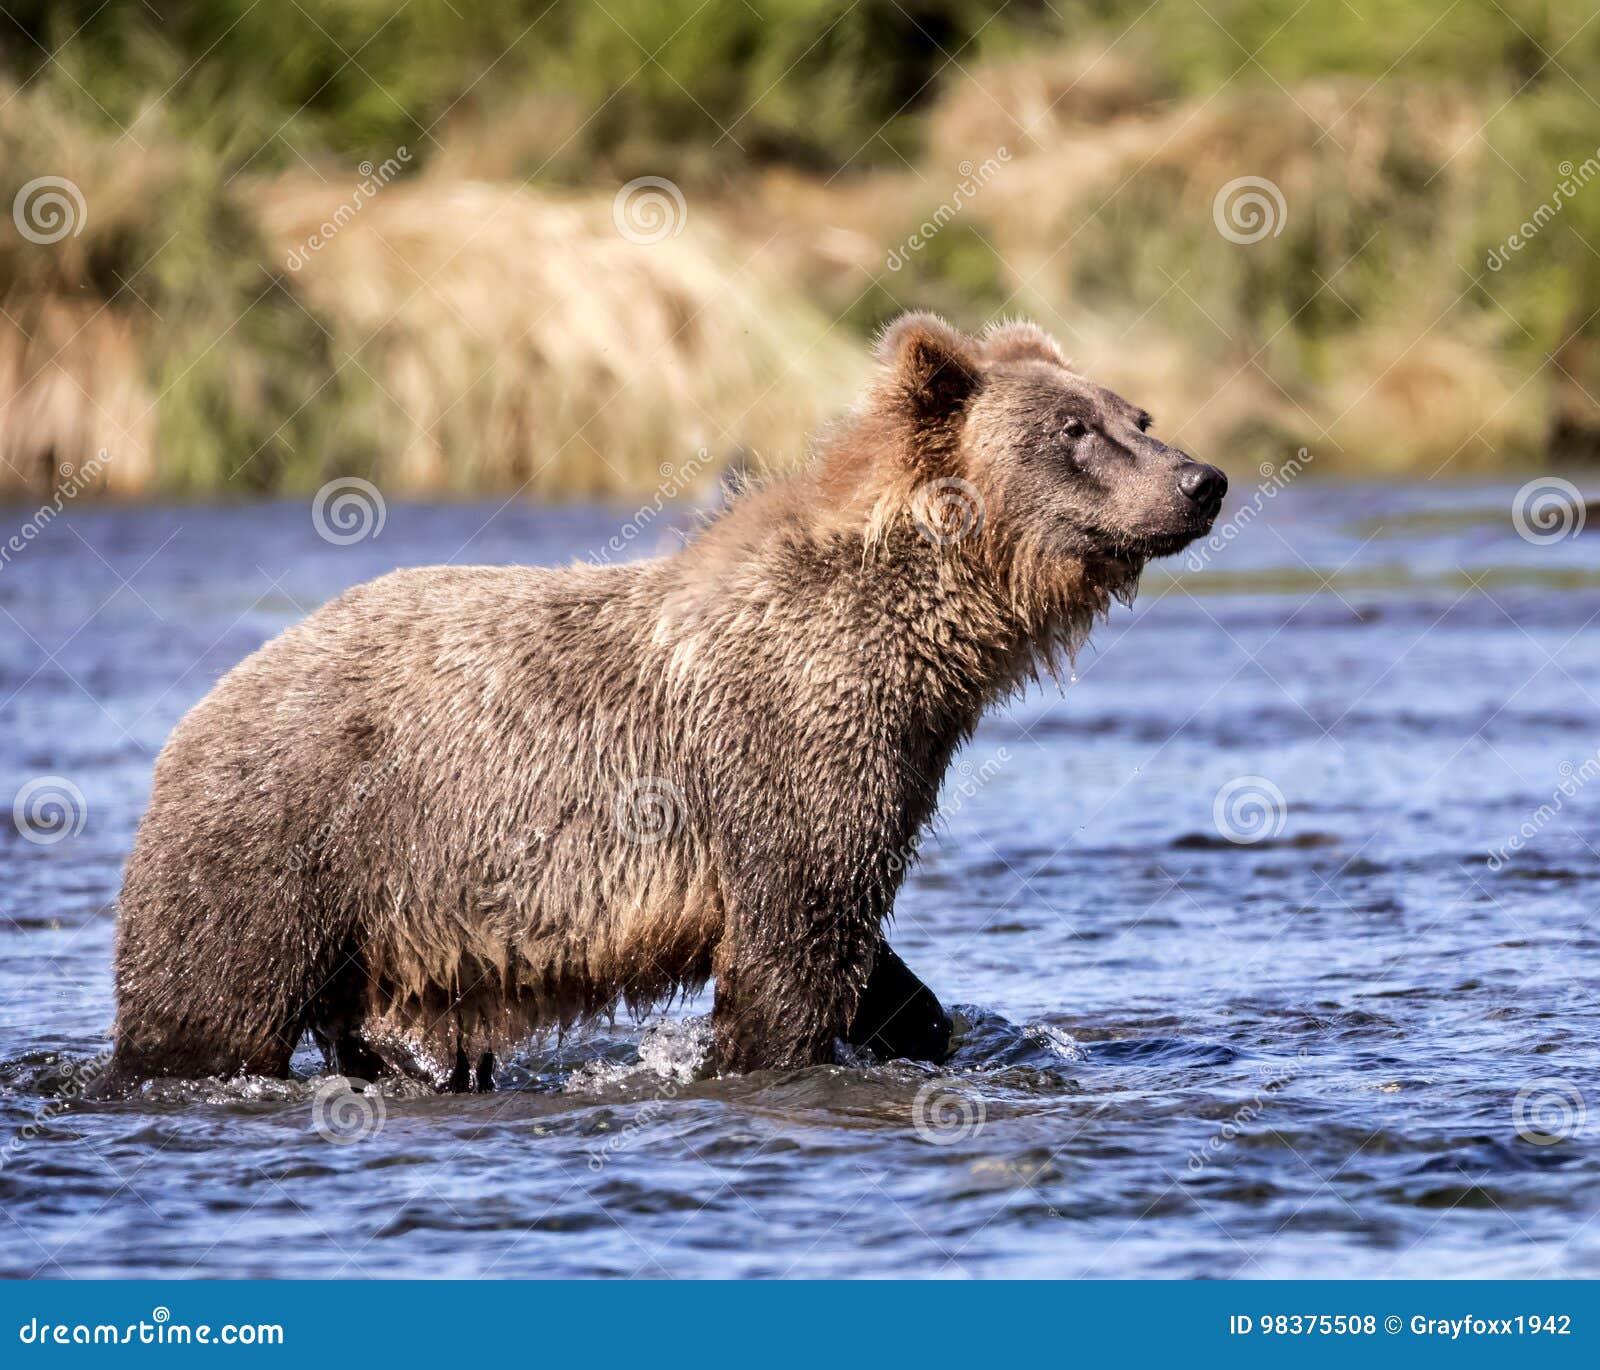 katmai brown bears; brooks falls; alaska; usa